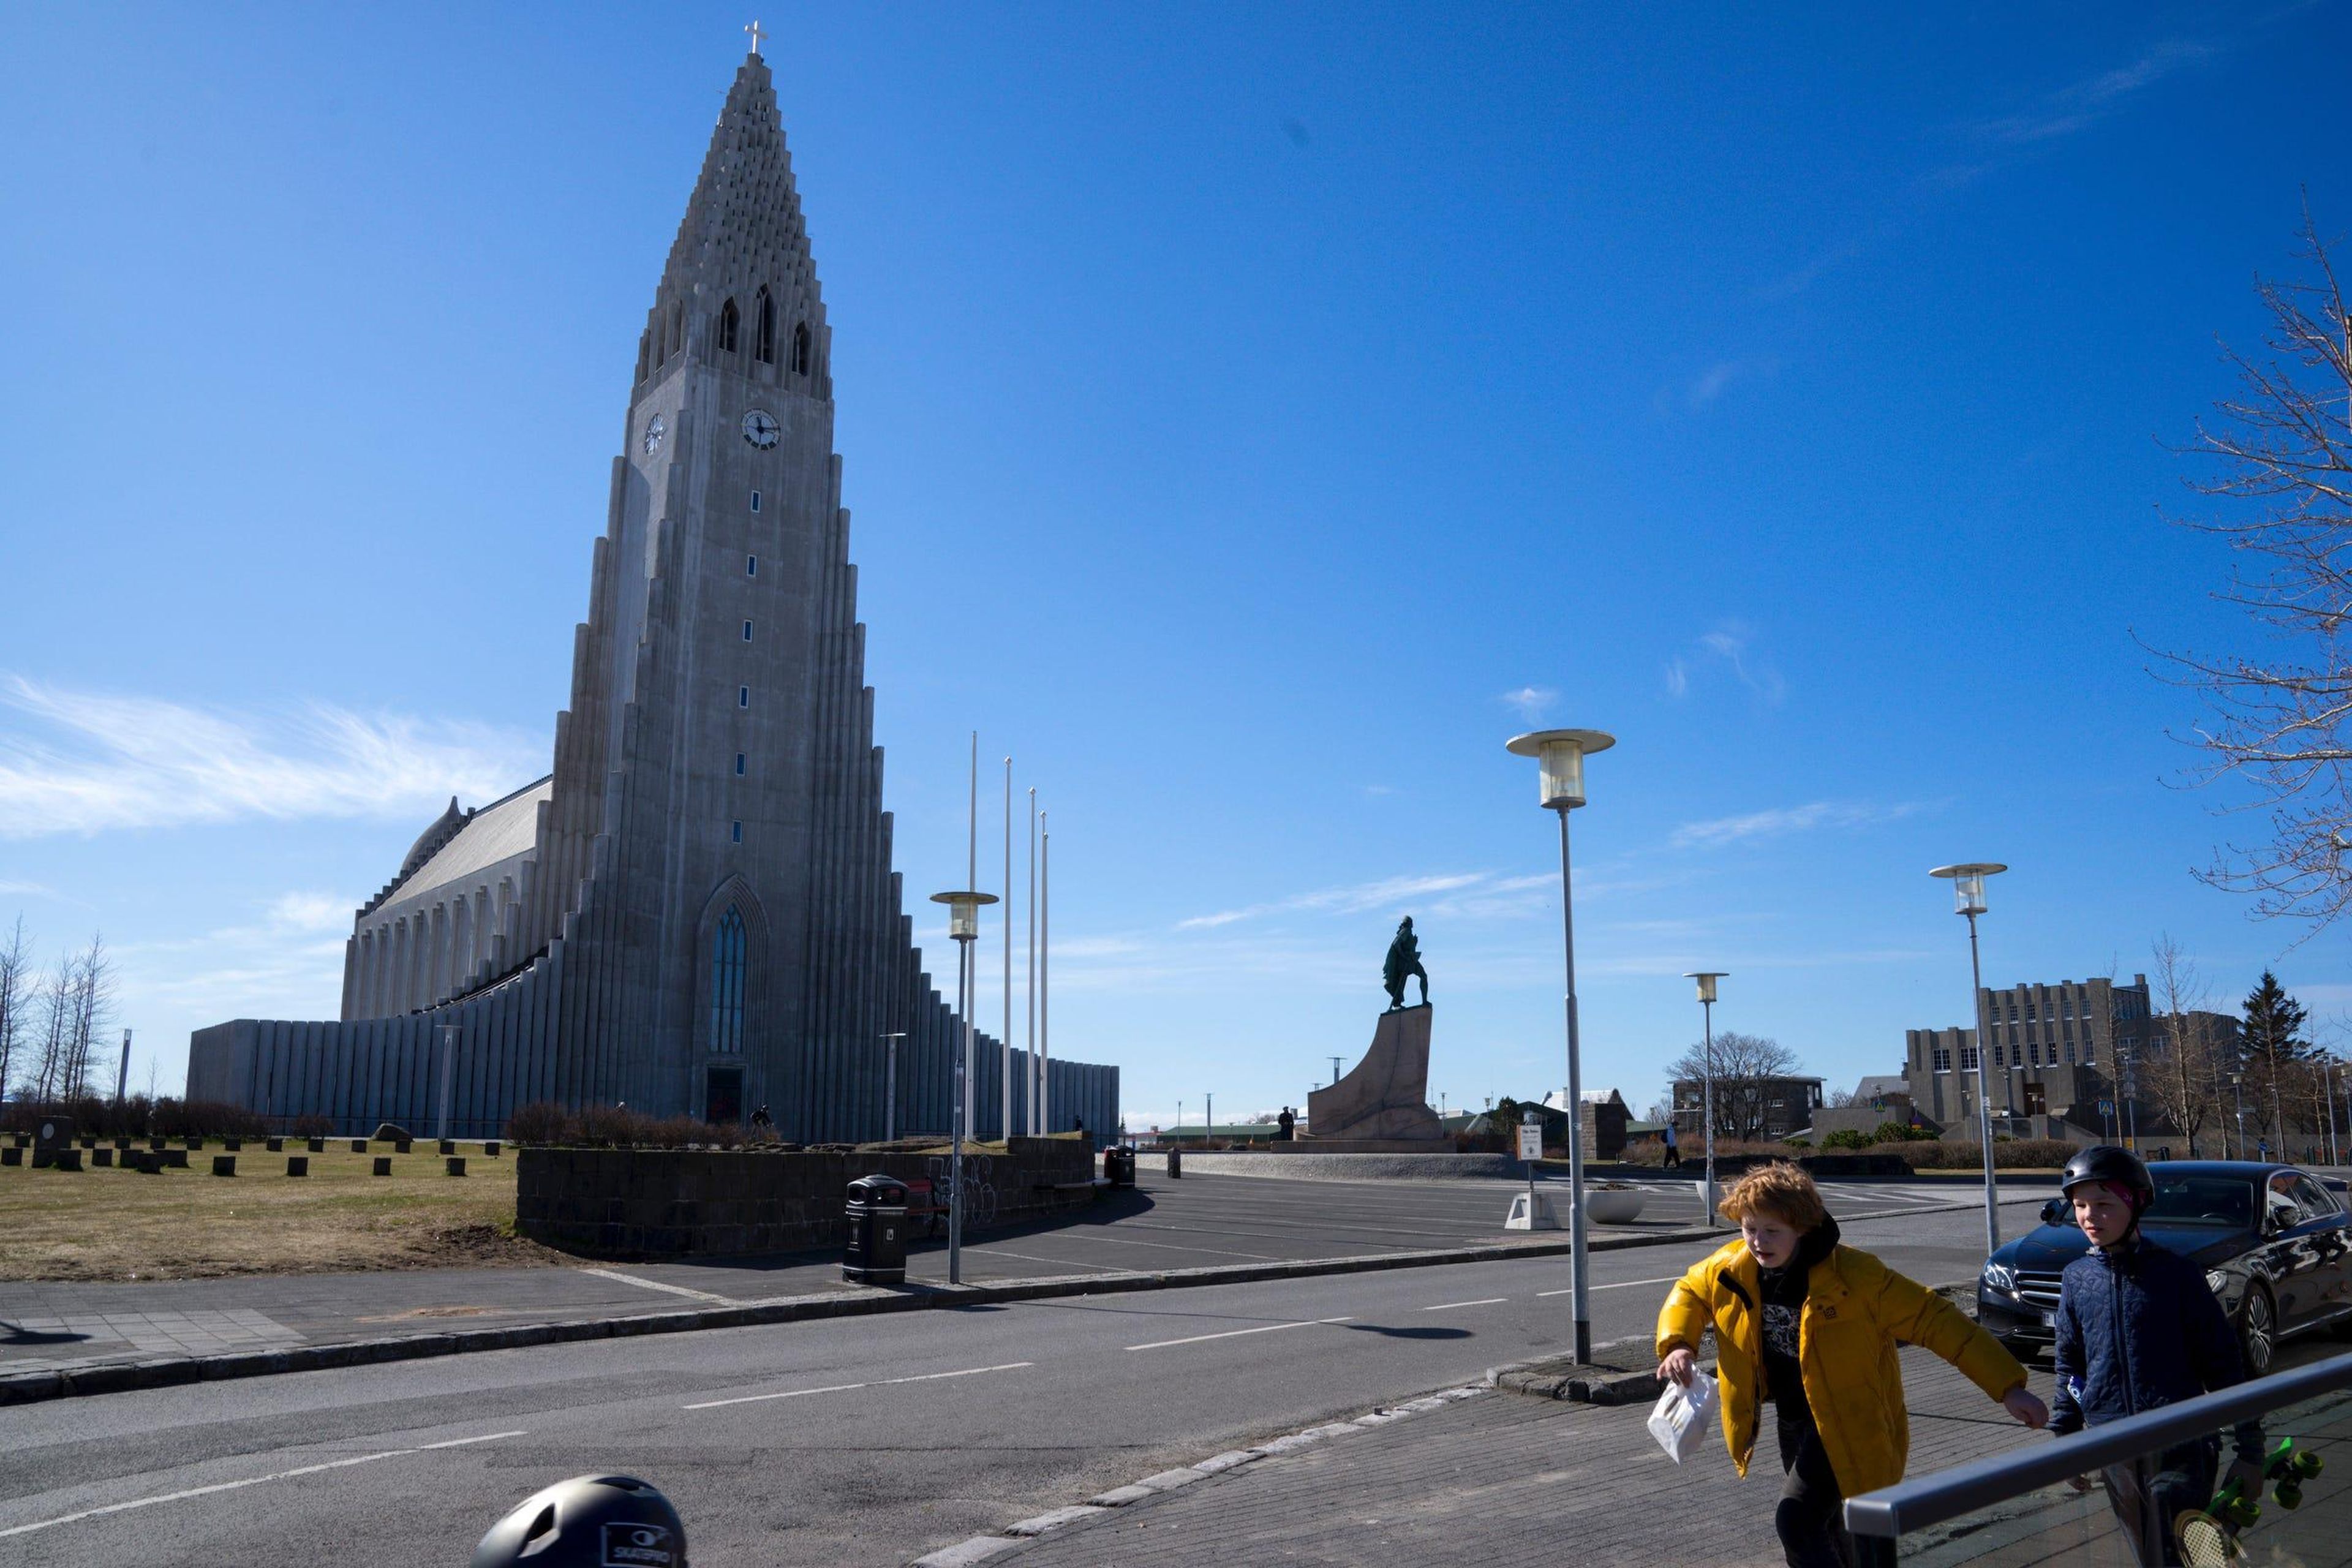 Reykjavik's Hallgrimskirkja Church, normally a popular tourist destination, on April 29 2020.